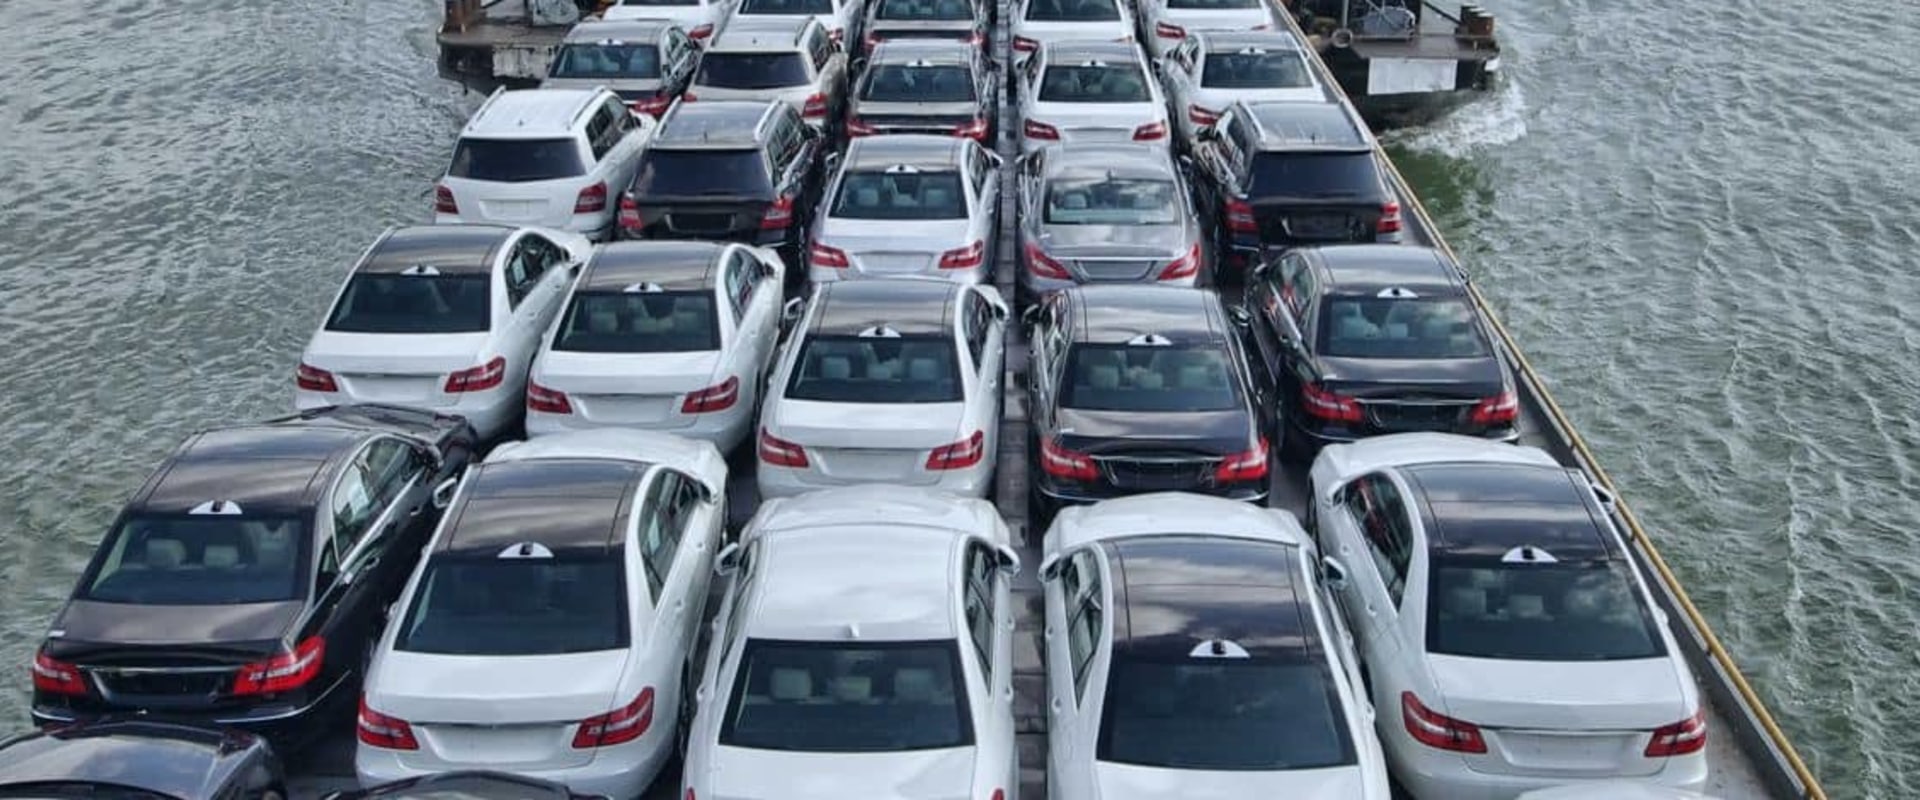 Can cars be shipped internationally?